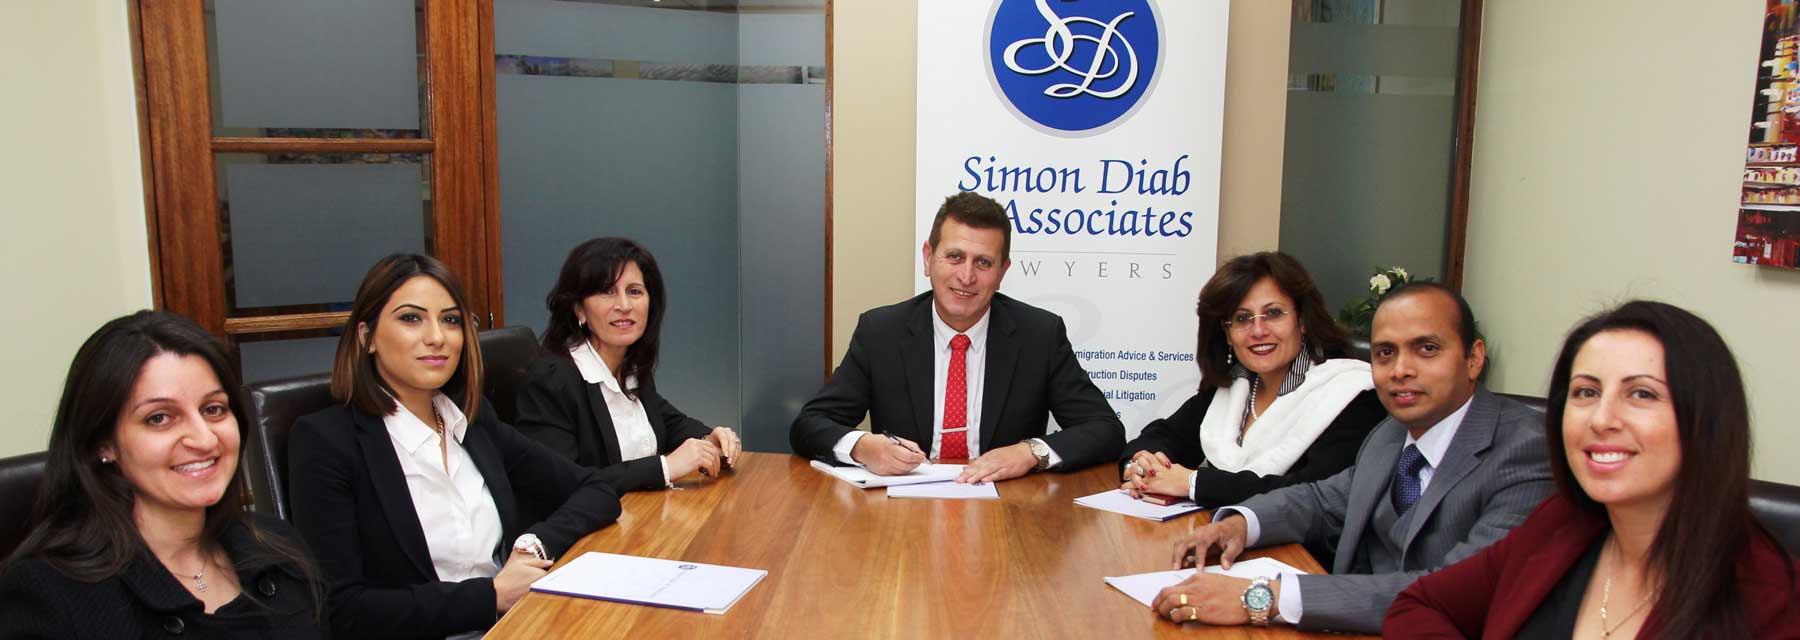 Simon Diab & Associates Staff